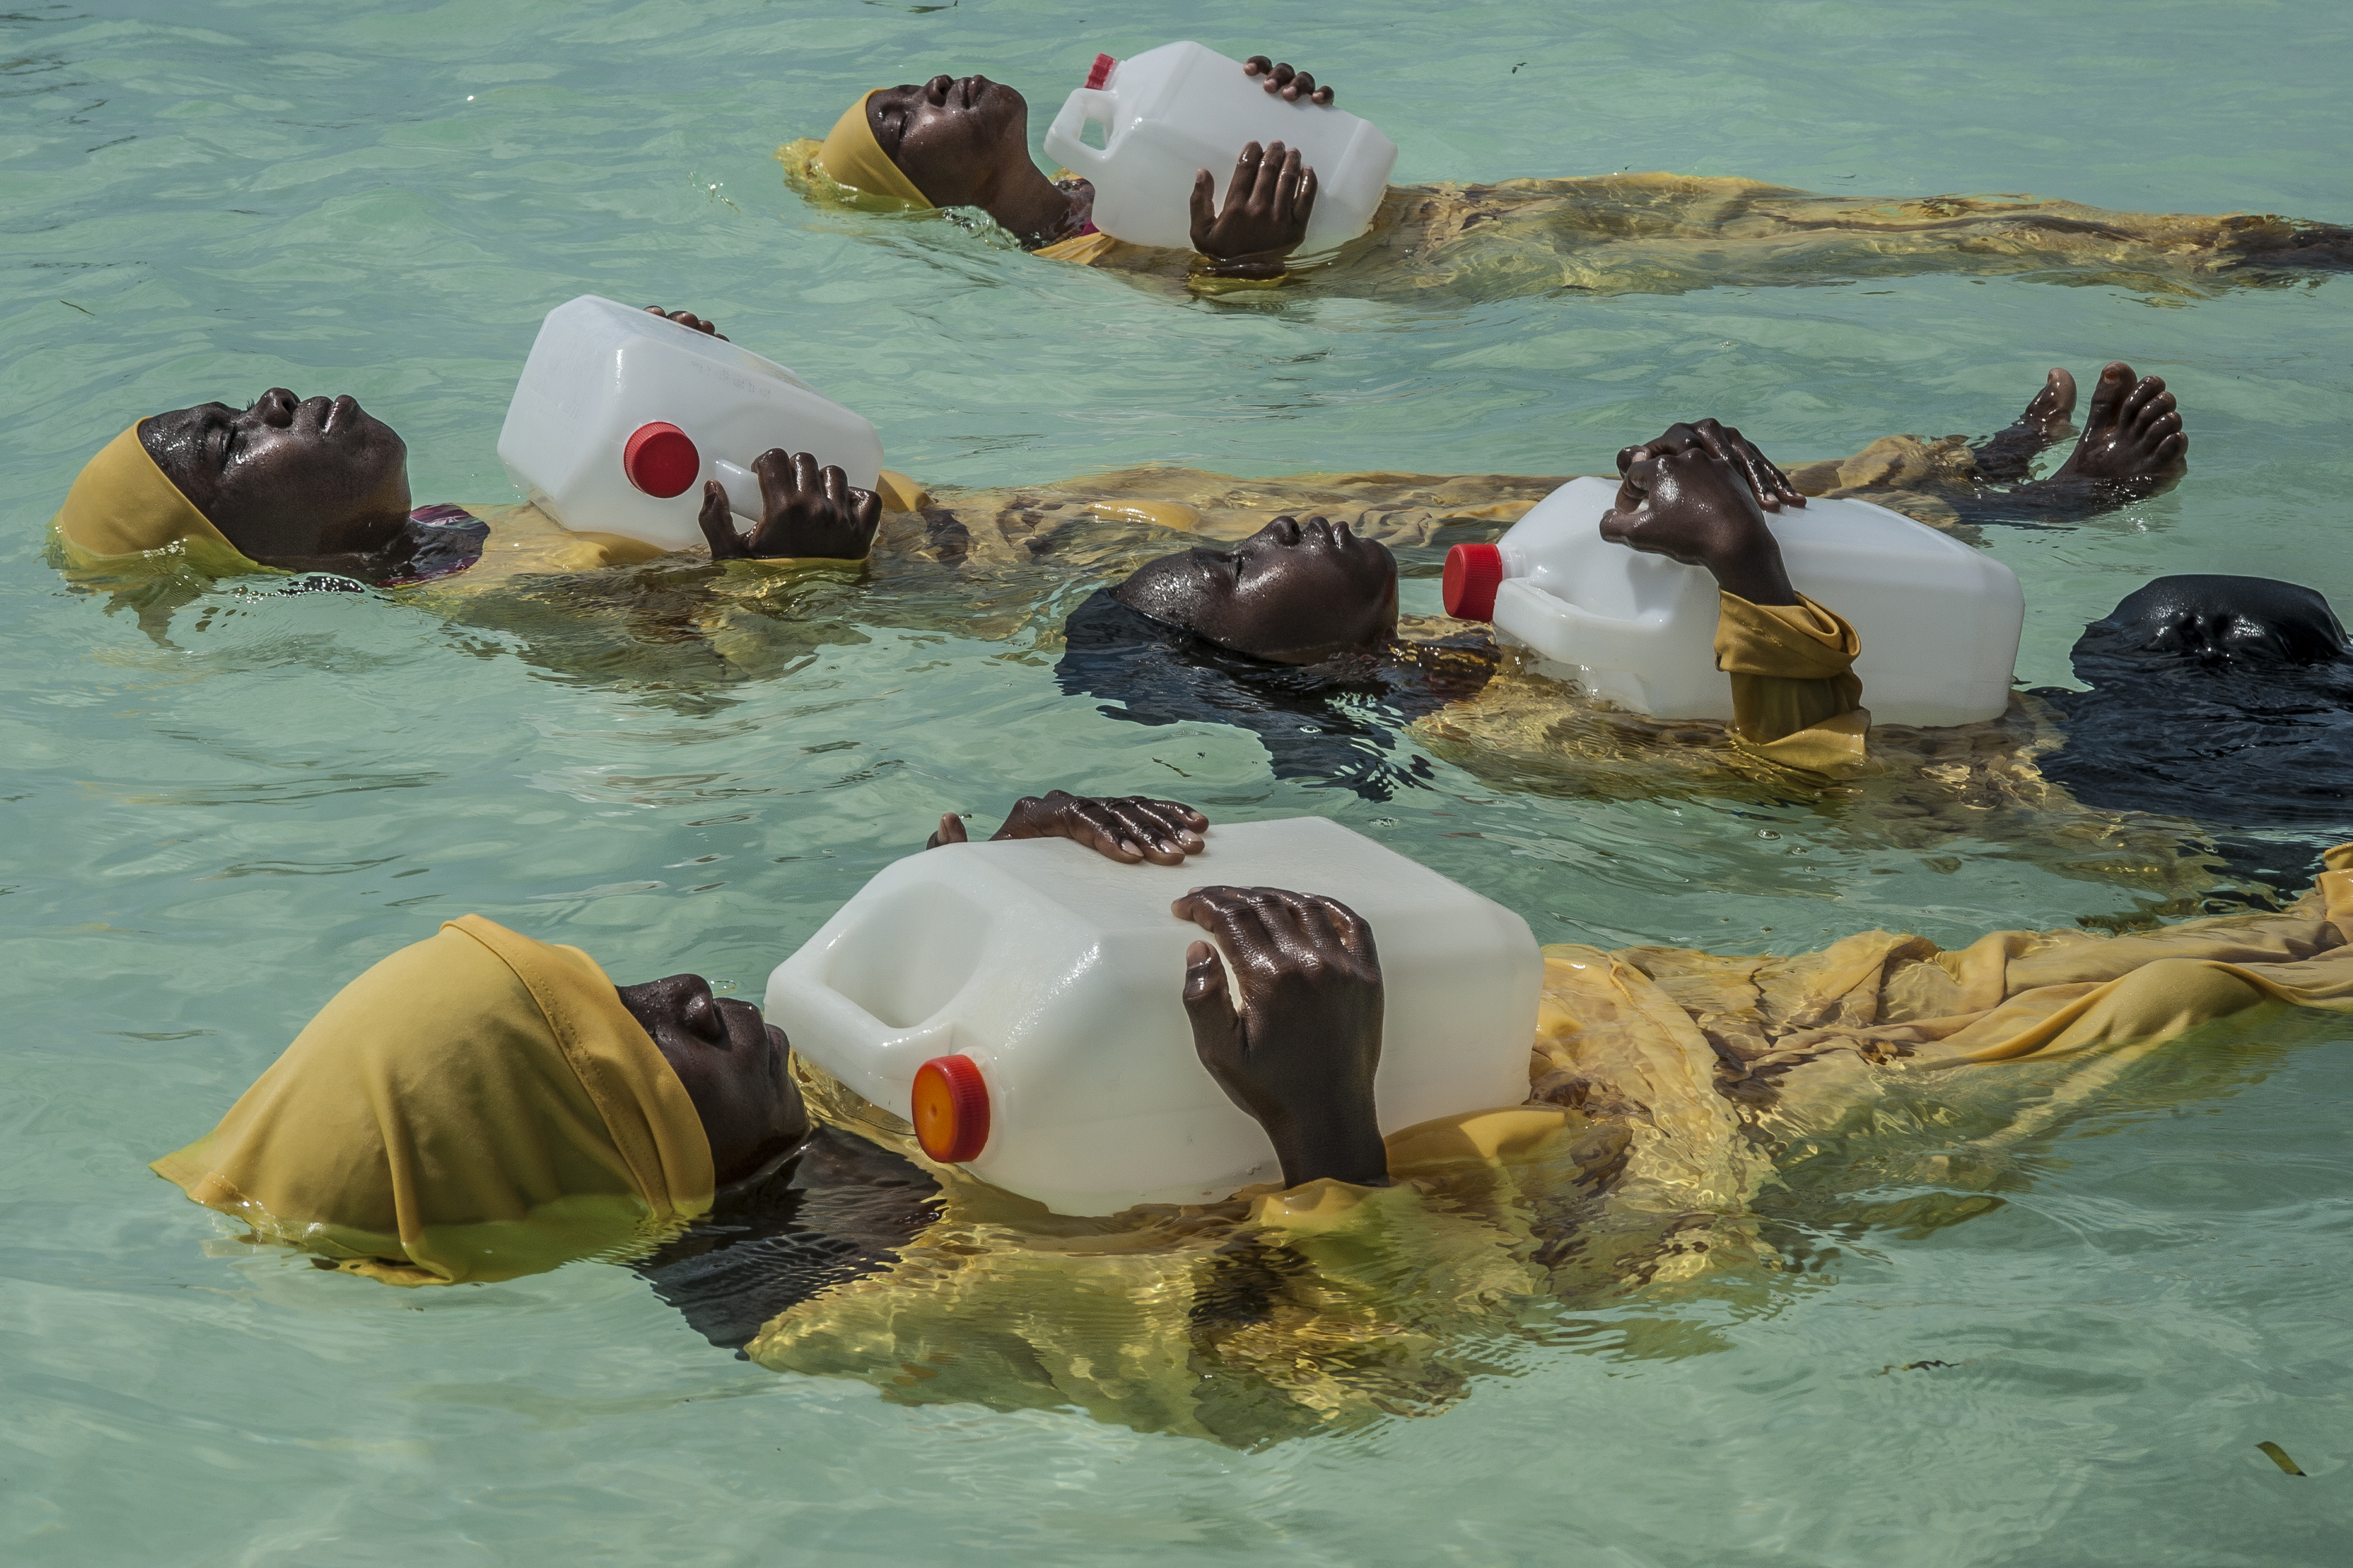 Primary school students from Zanzibar during swimming lessons © Anna Boyiazis